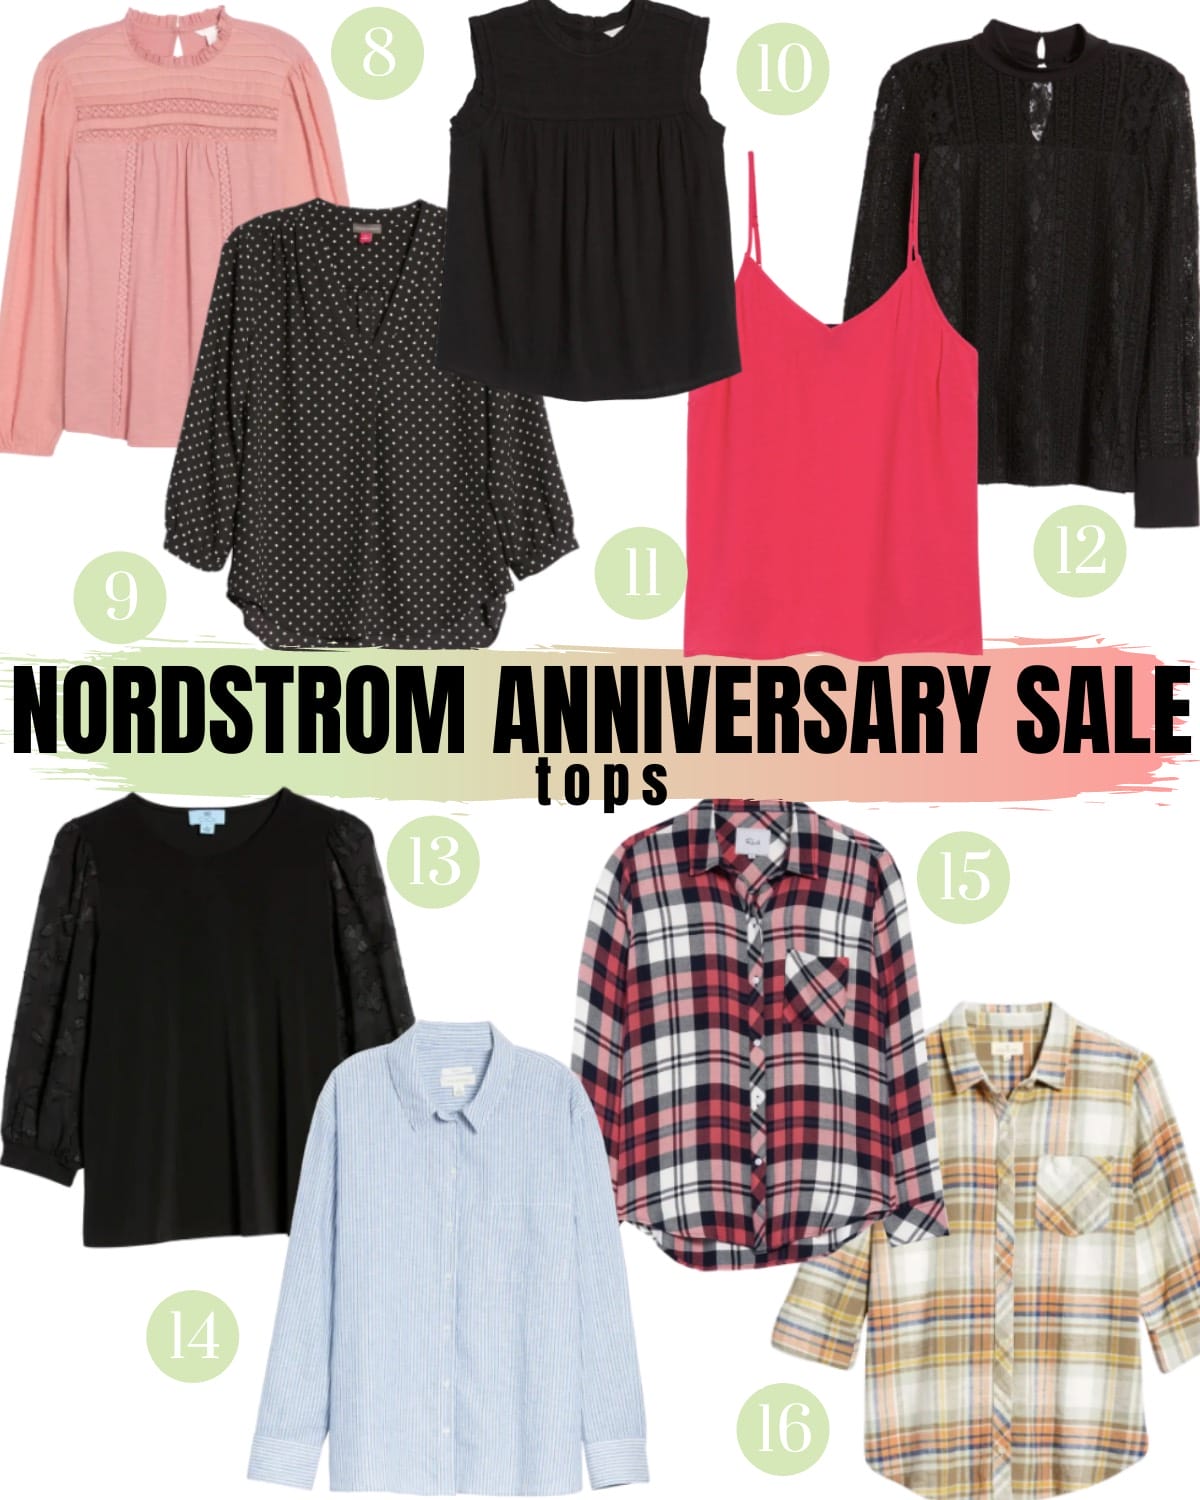 Nordstrom Anniversary Sale 2020 tops